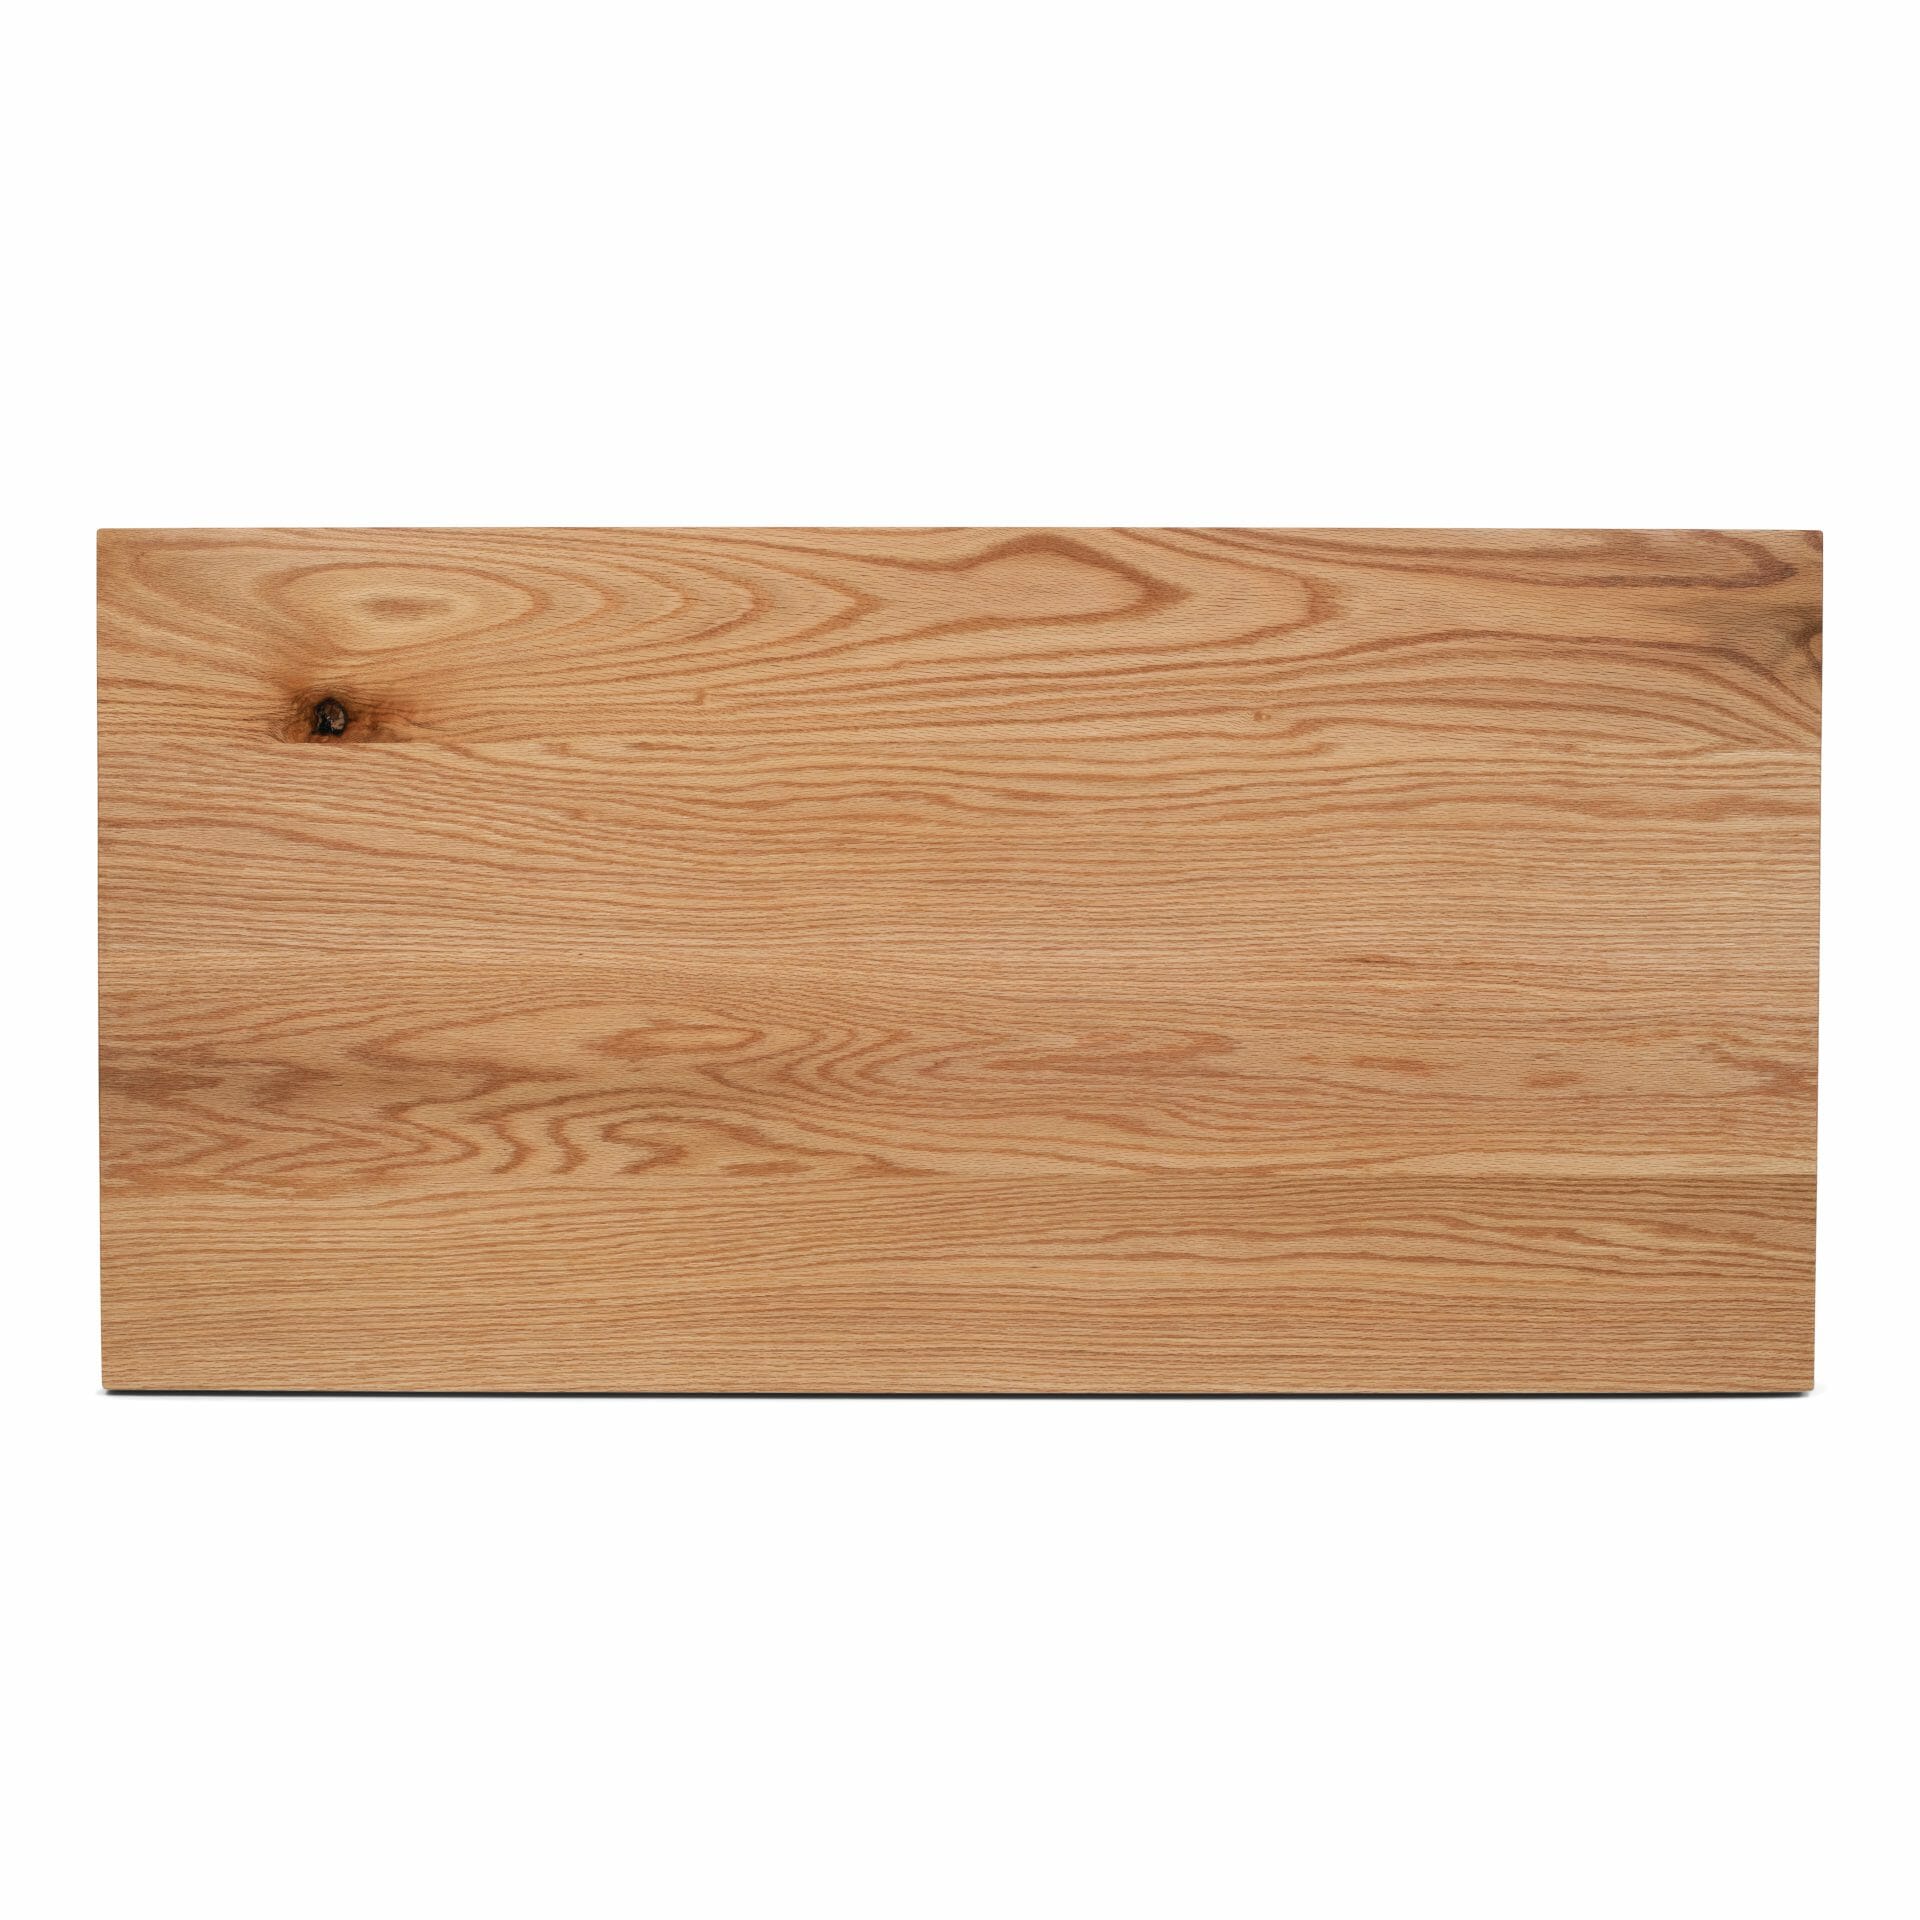 Red oak wood countertop table top